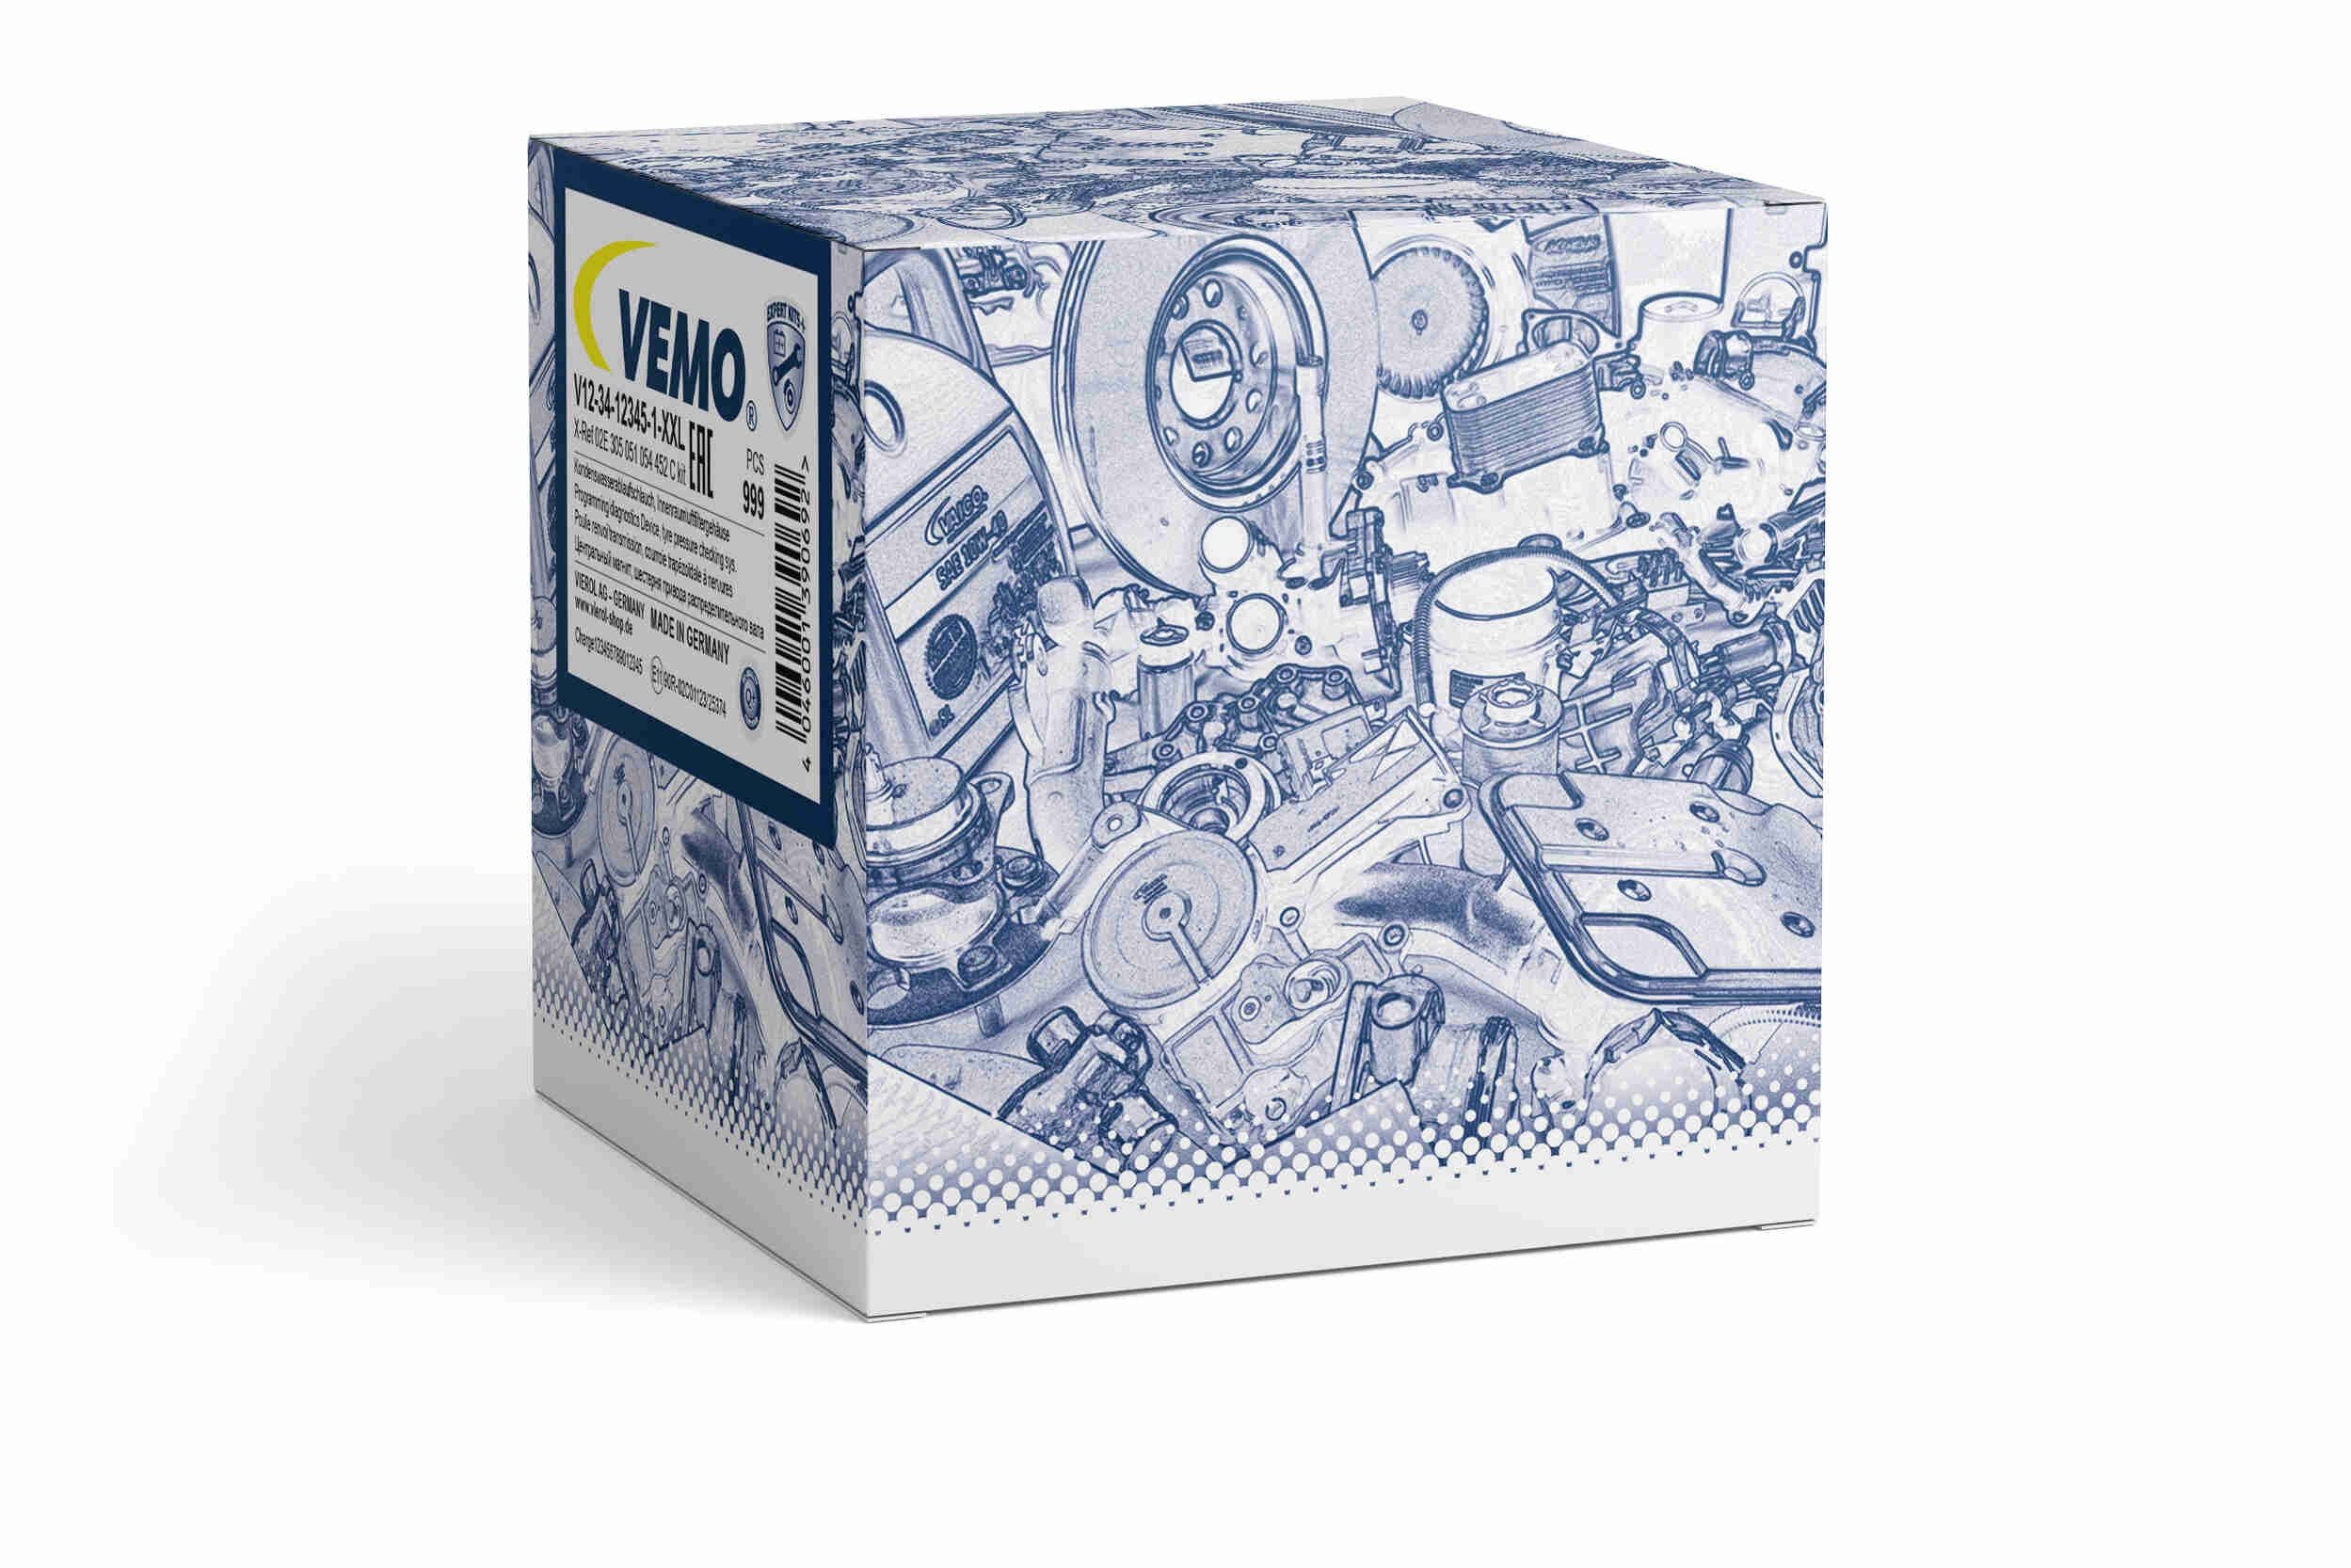 VEMO V10-72-0861 Fuel rail pressure sensor Q+, original equipment manufacturer quality